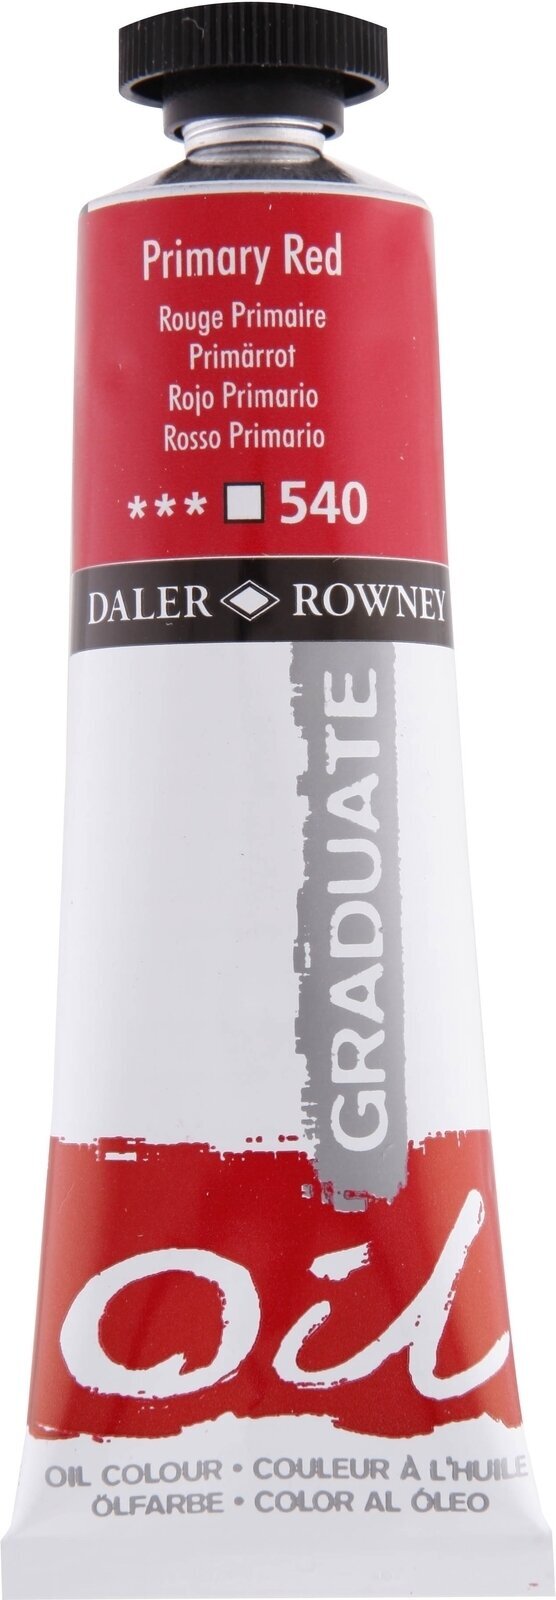 Oil colour Daler Rowney Graduate Oil Paint Primary Red 38 ml 1 pc